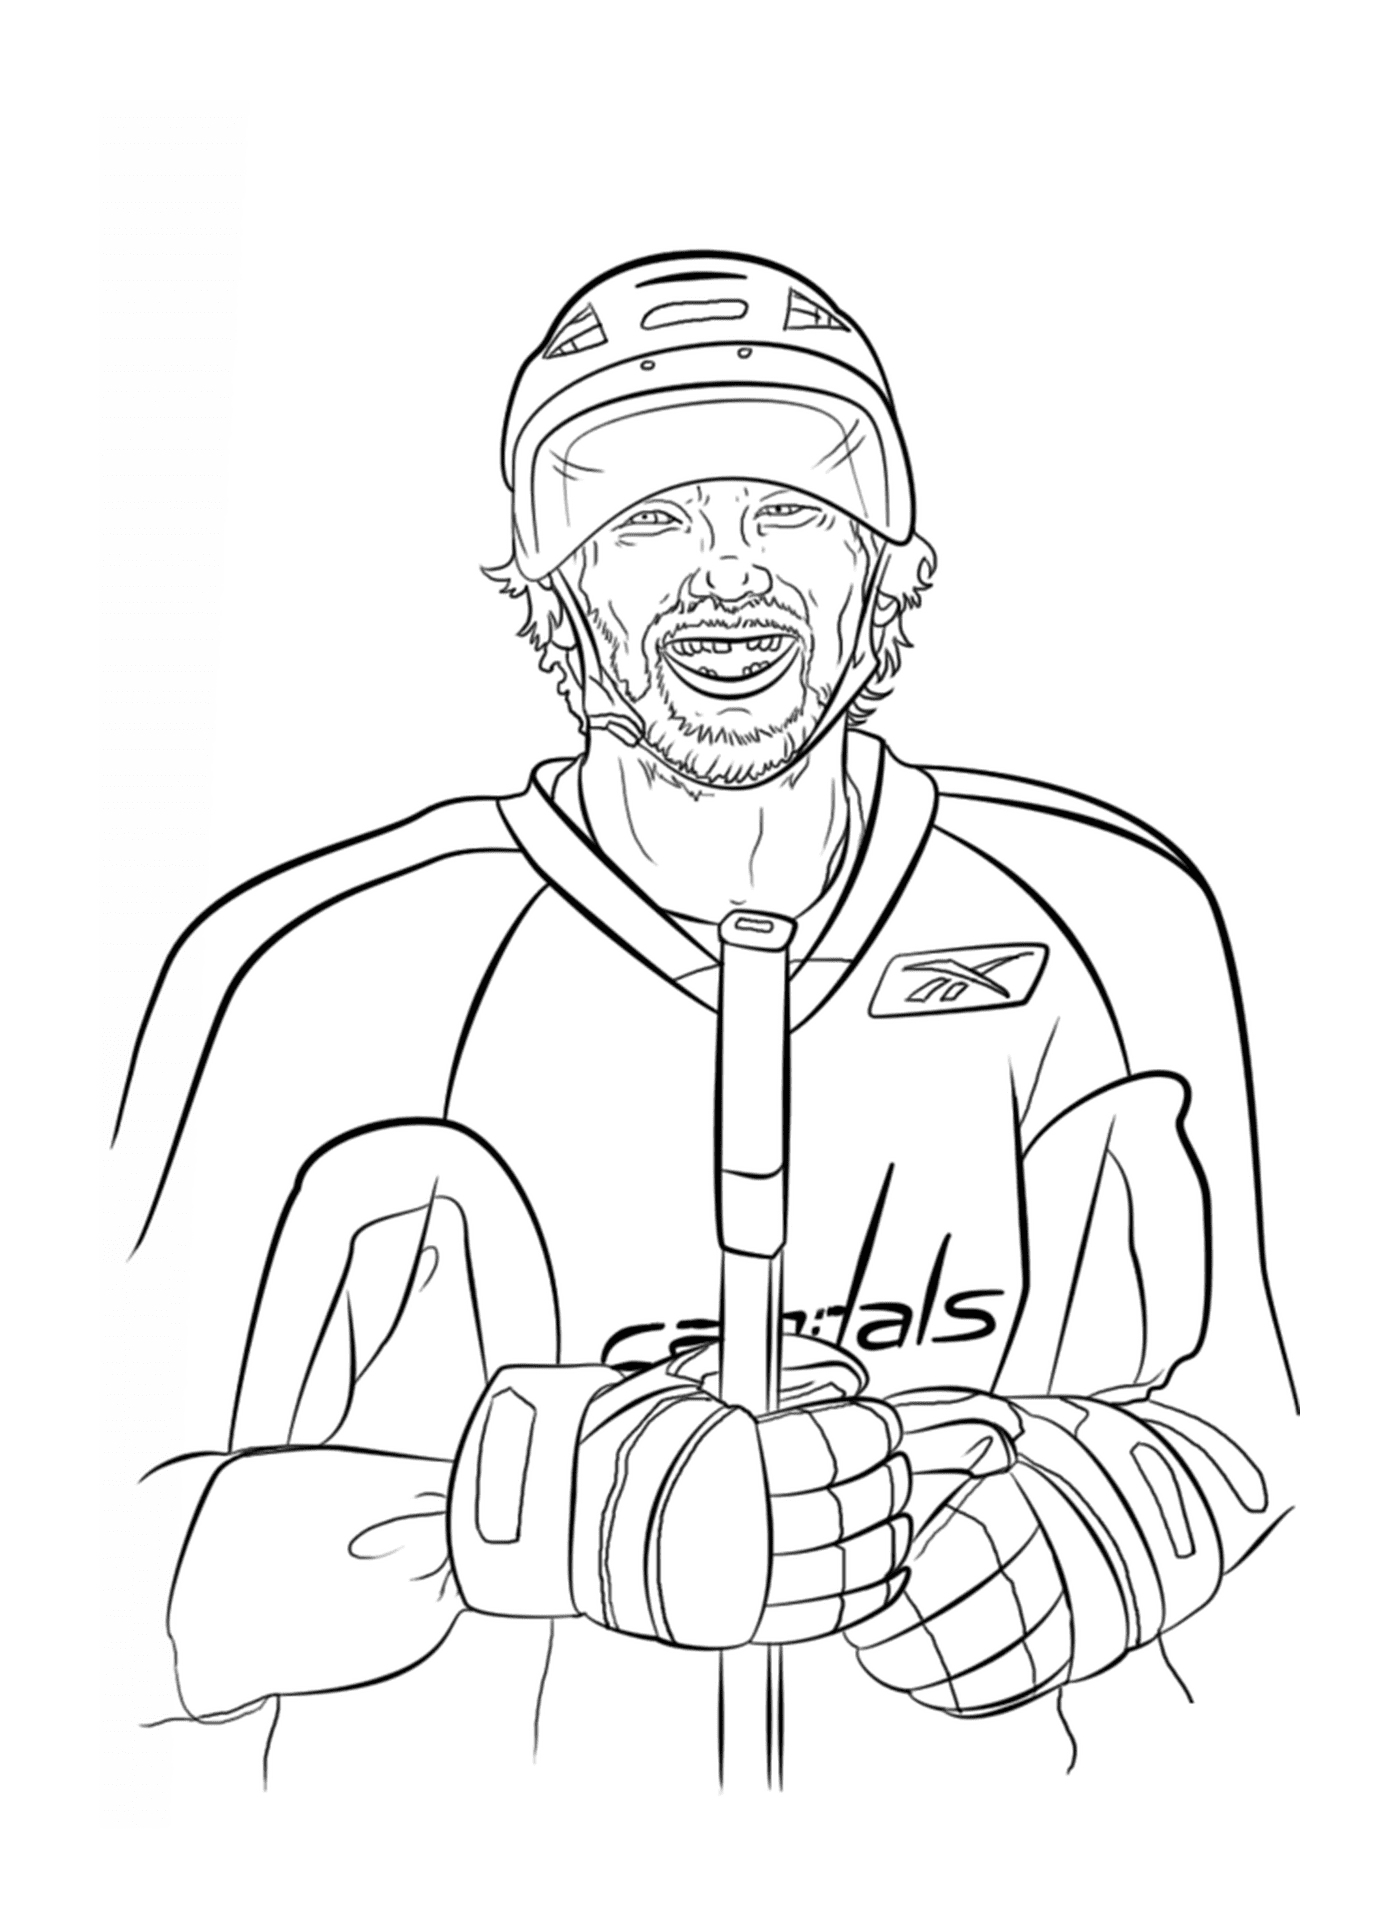  Alex Ovechkin, hockey player 